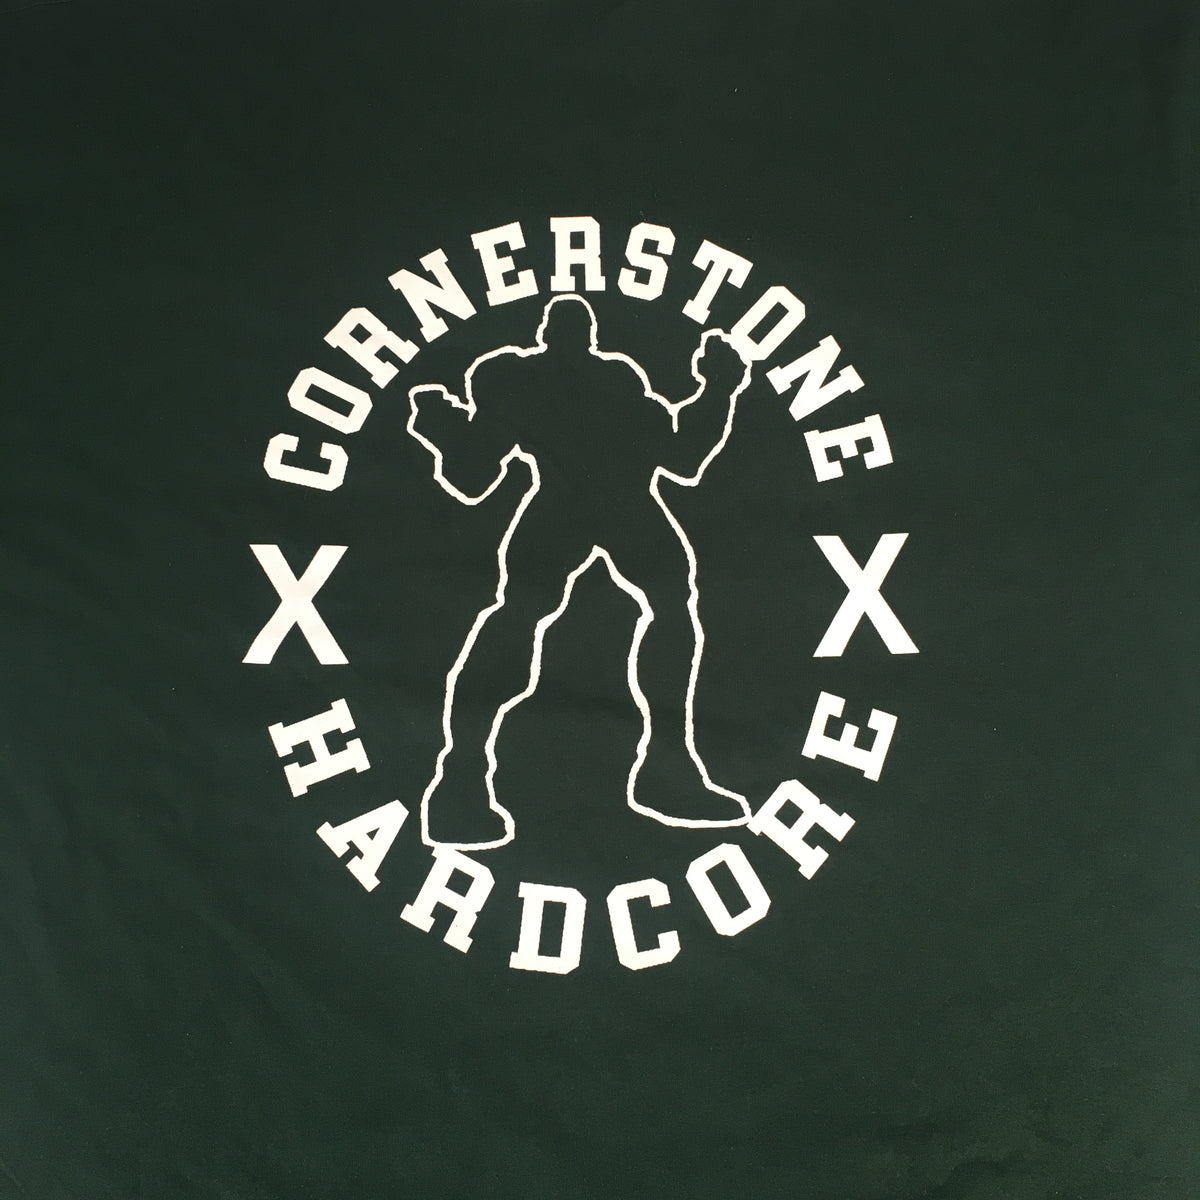 Vintage Cornerstone &quot;Hardcore&quot; T-Shirt - jointcustodydc